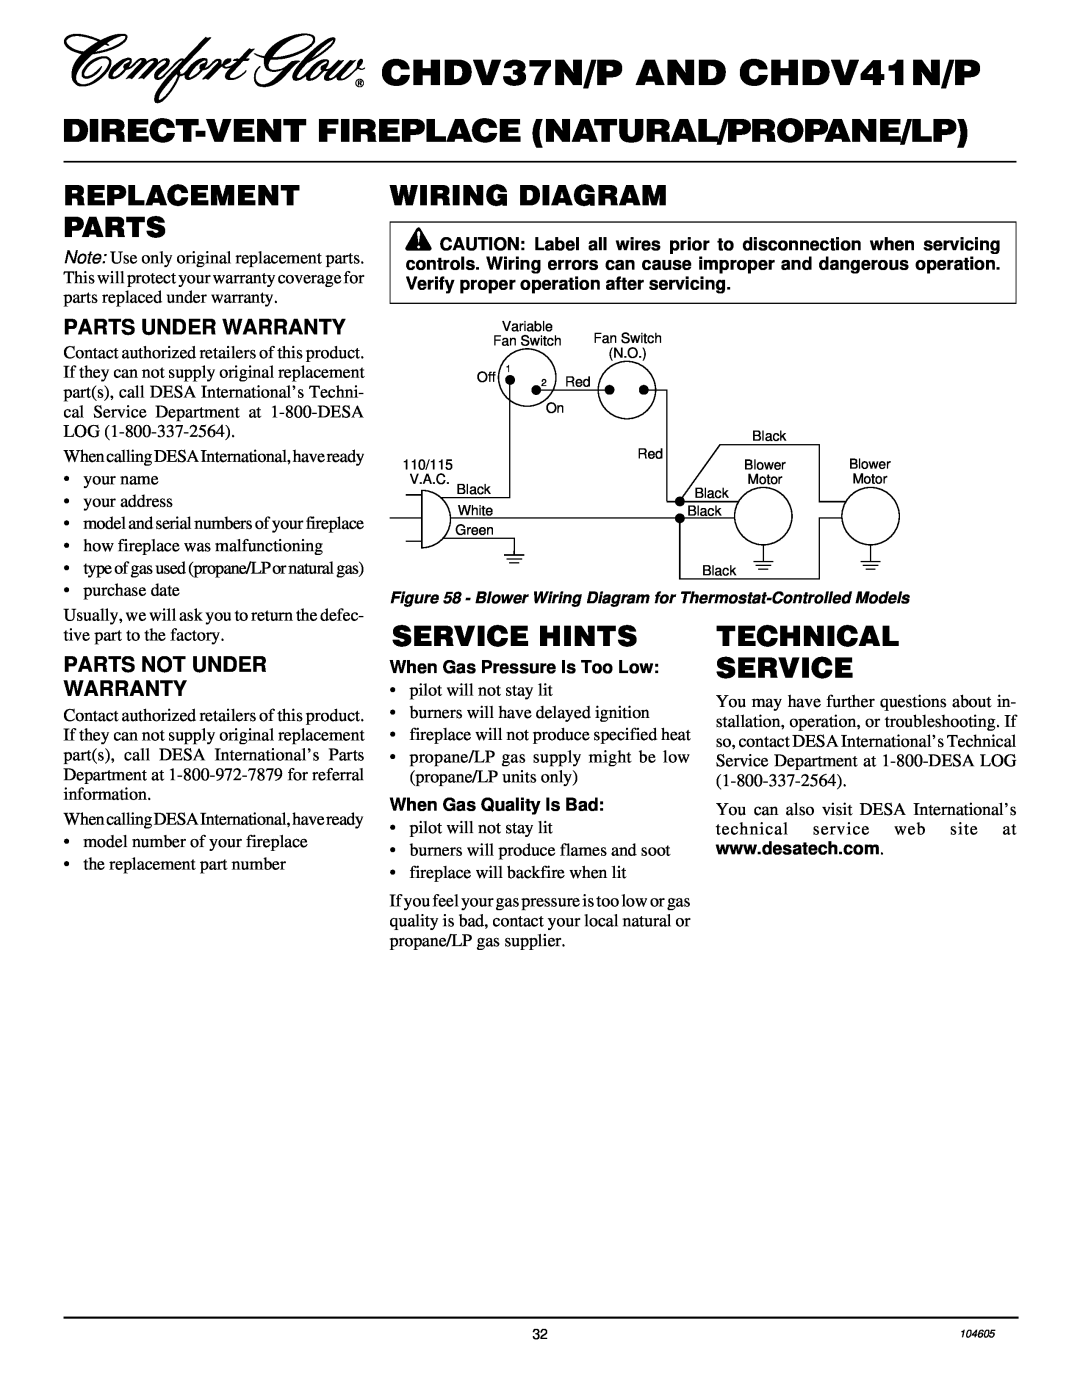 Desa Tech CHDV41P, CHDV41N Replacement Parts, Wiring Diagram, Service Hints, Technical Service, Parts Under Warranty 